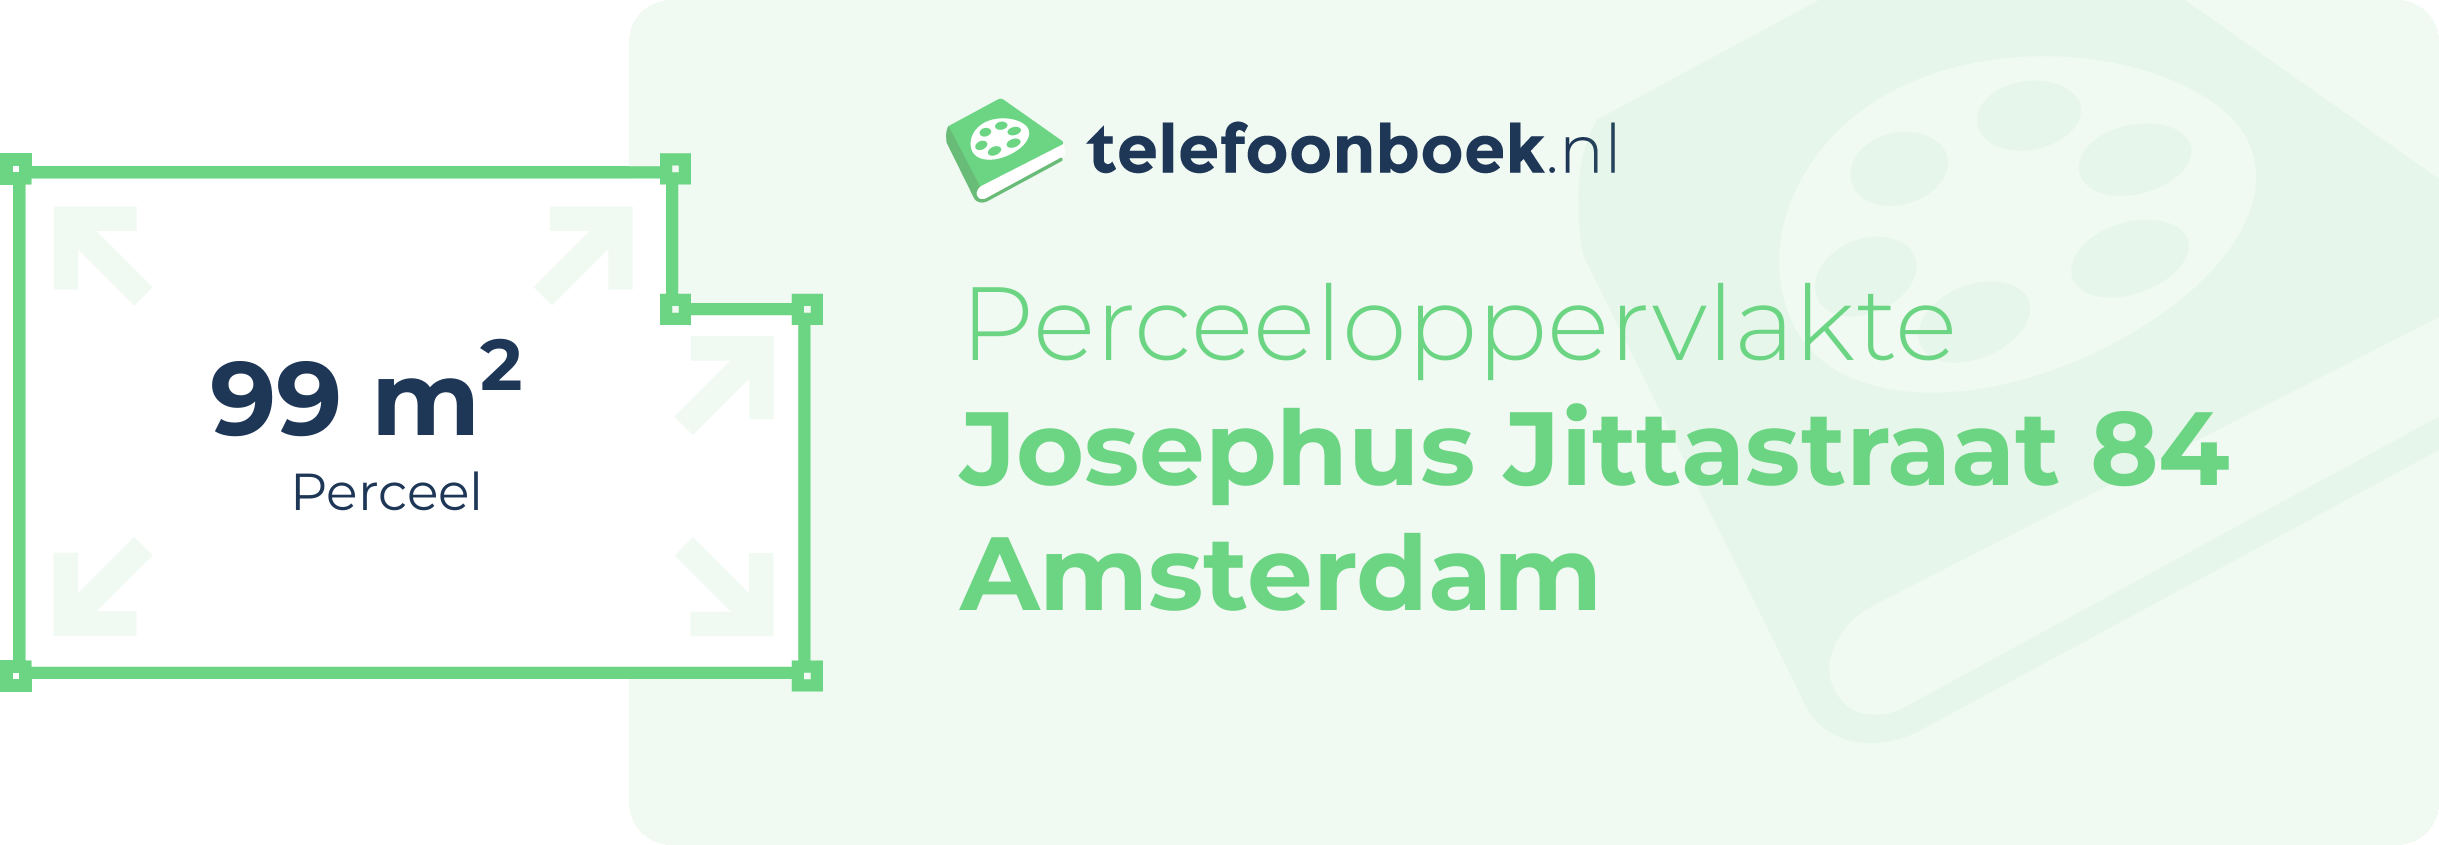 Perceeloppervlakte Josephus Jittastraat 84 Amsterdam